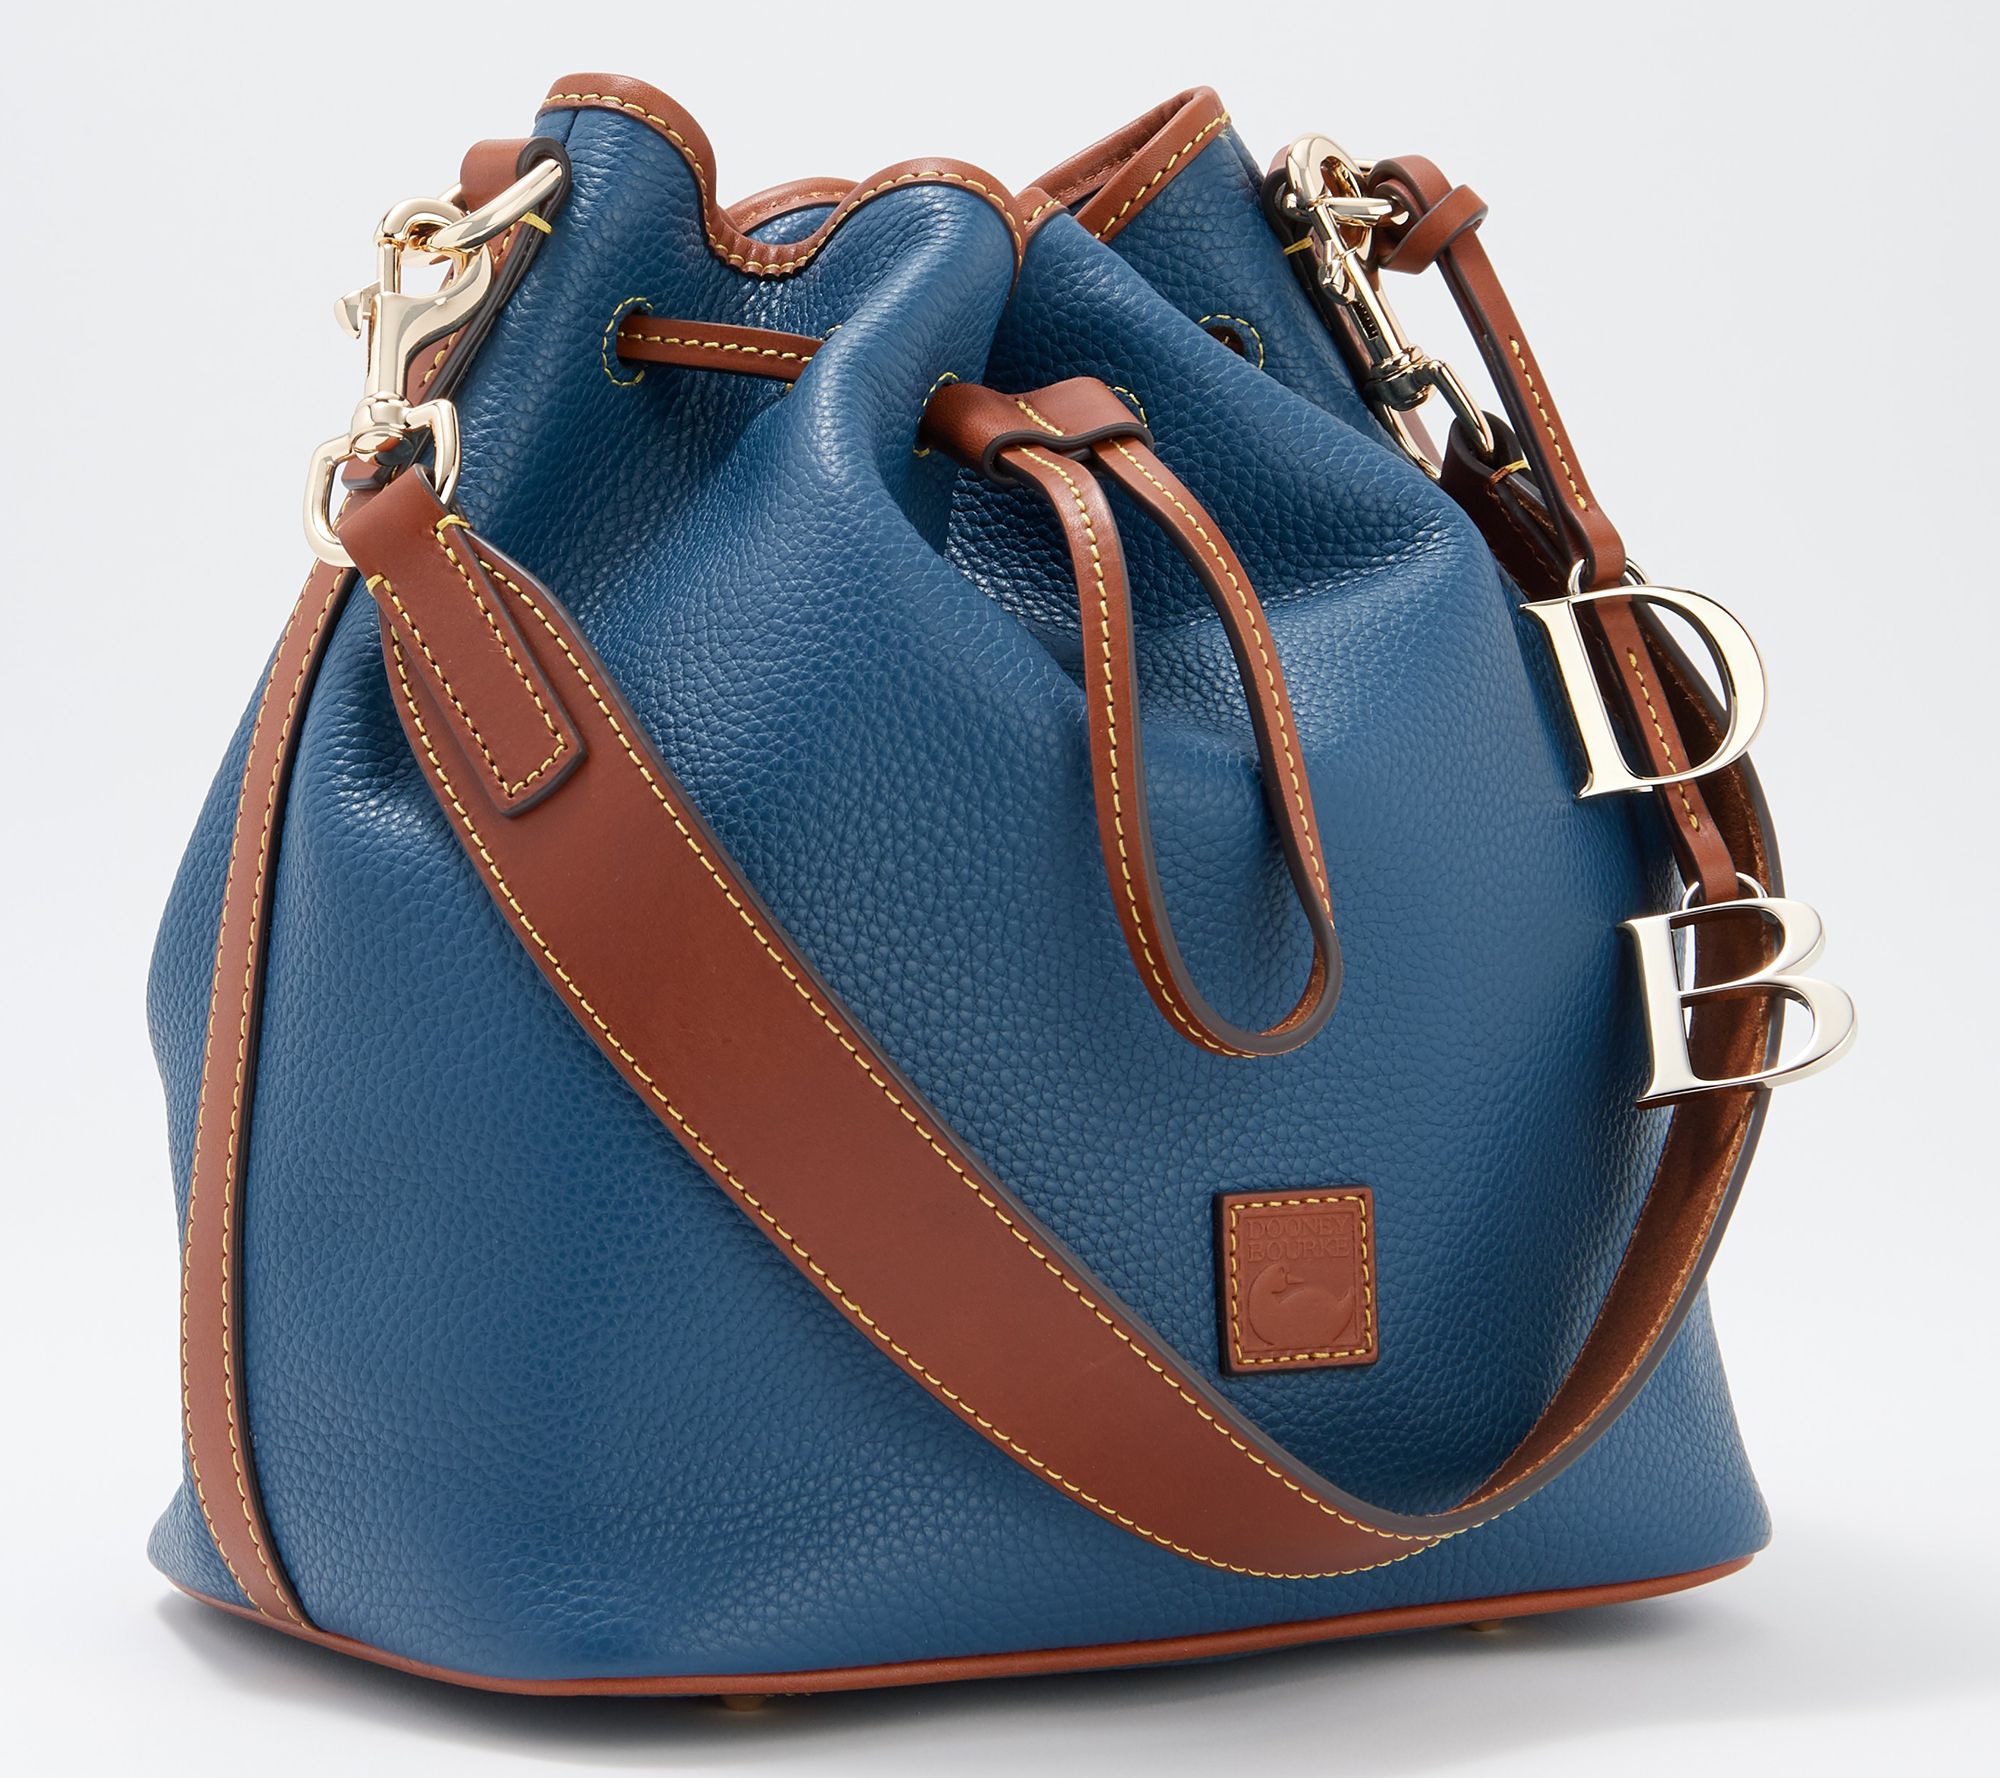 Dooney & Bourke Leather Drawstring Bag - QVC.com